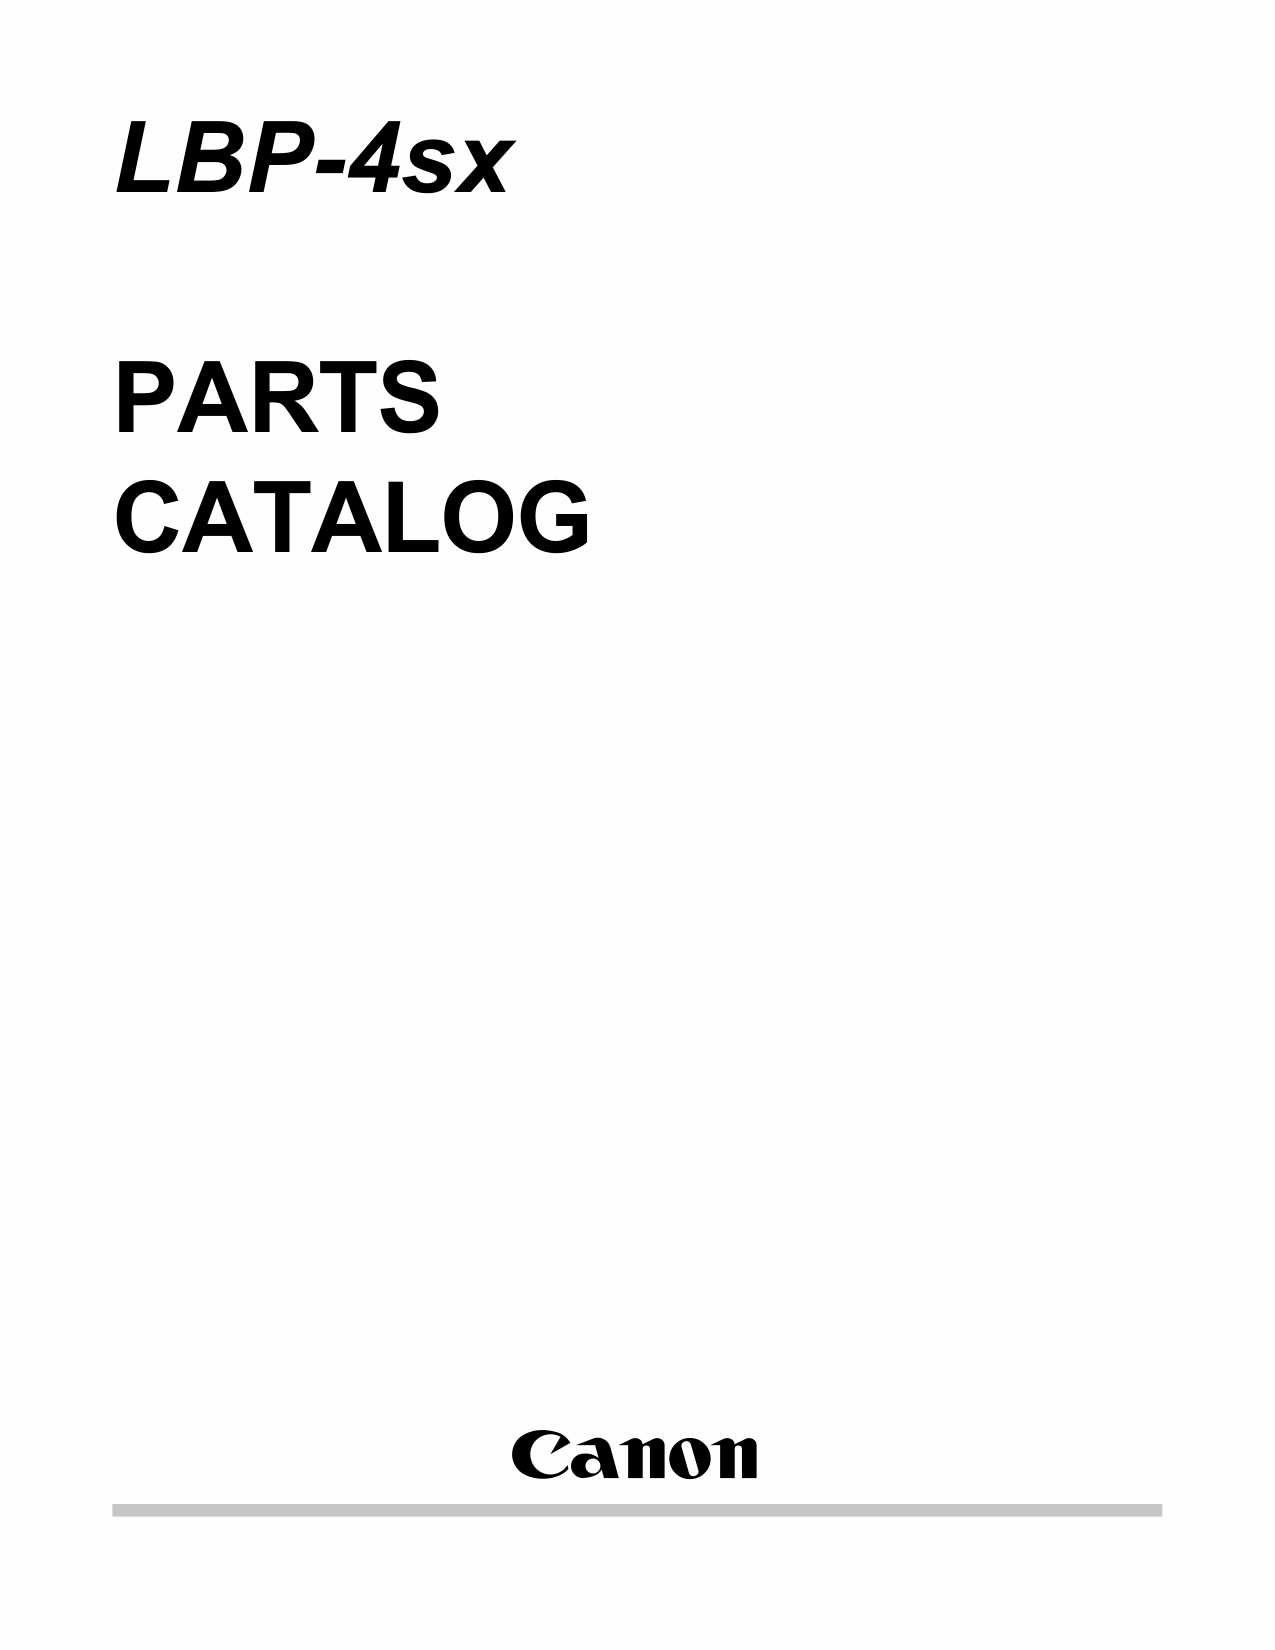 Canon imageCLASS LBP-4sx Parts Catalog Manual-1